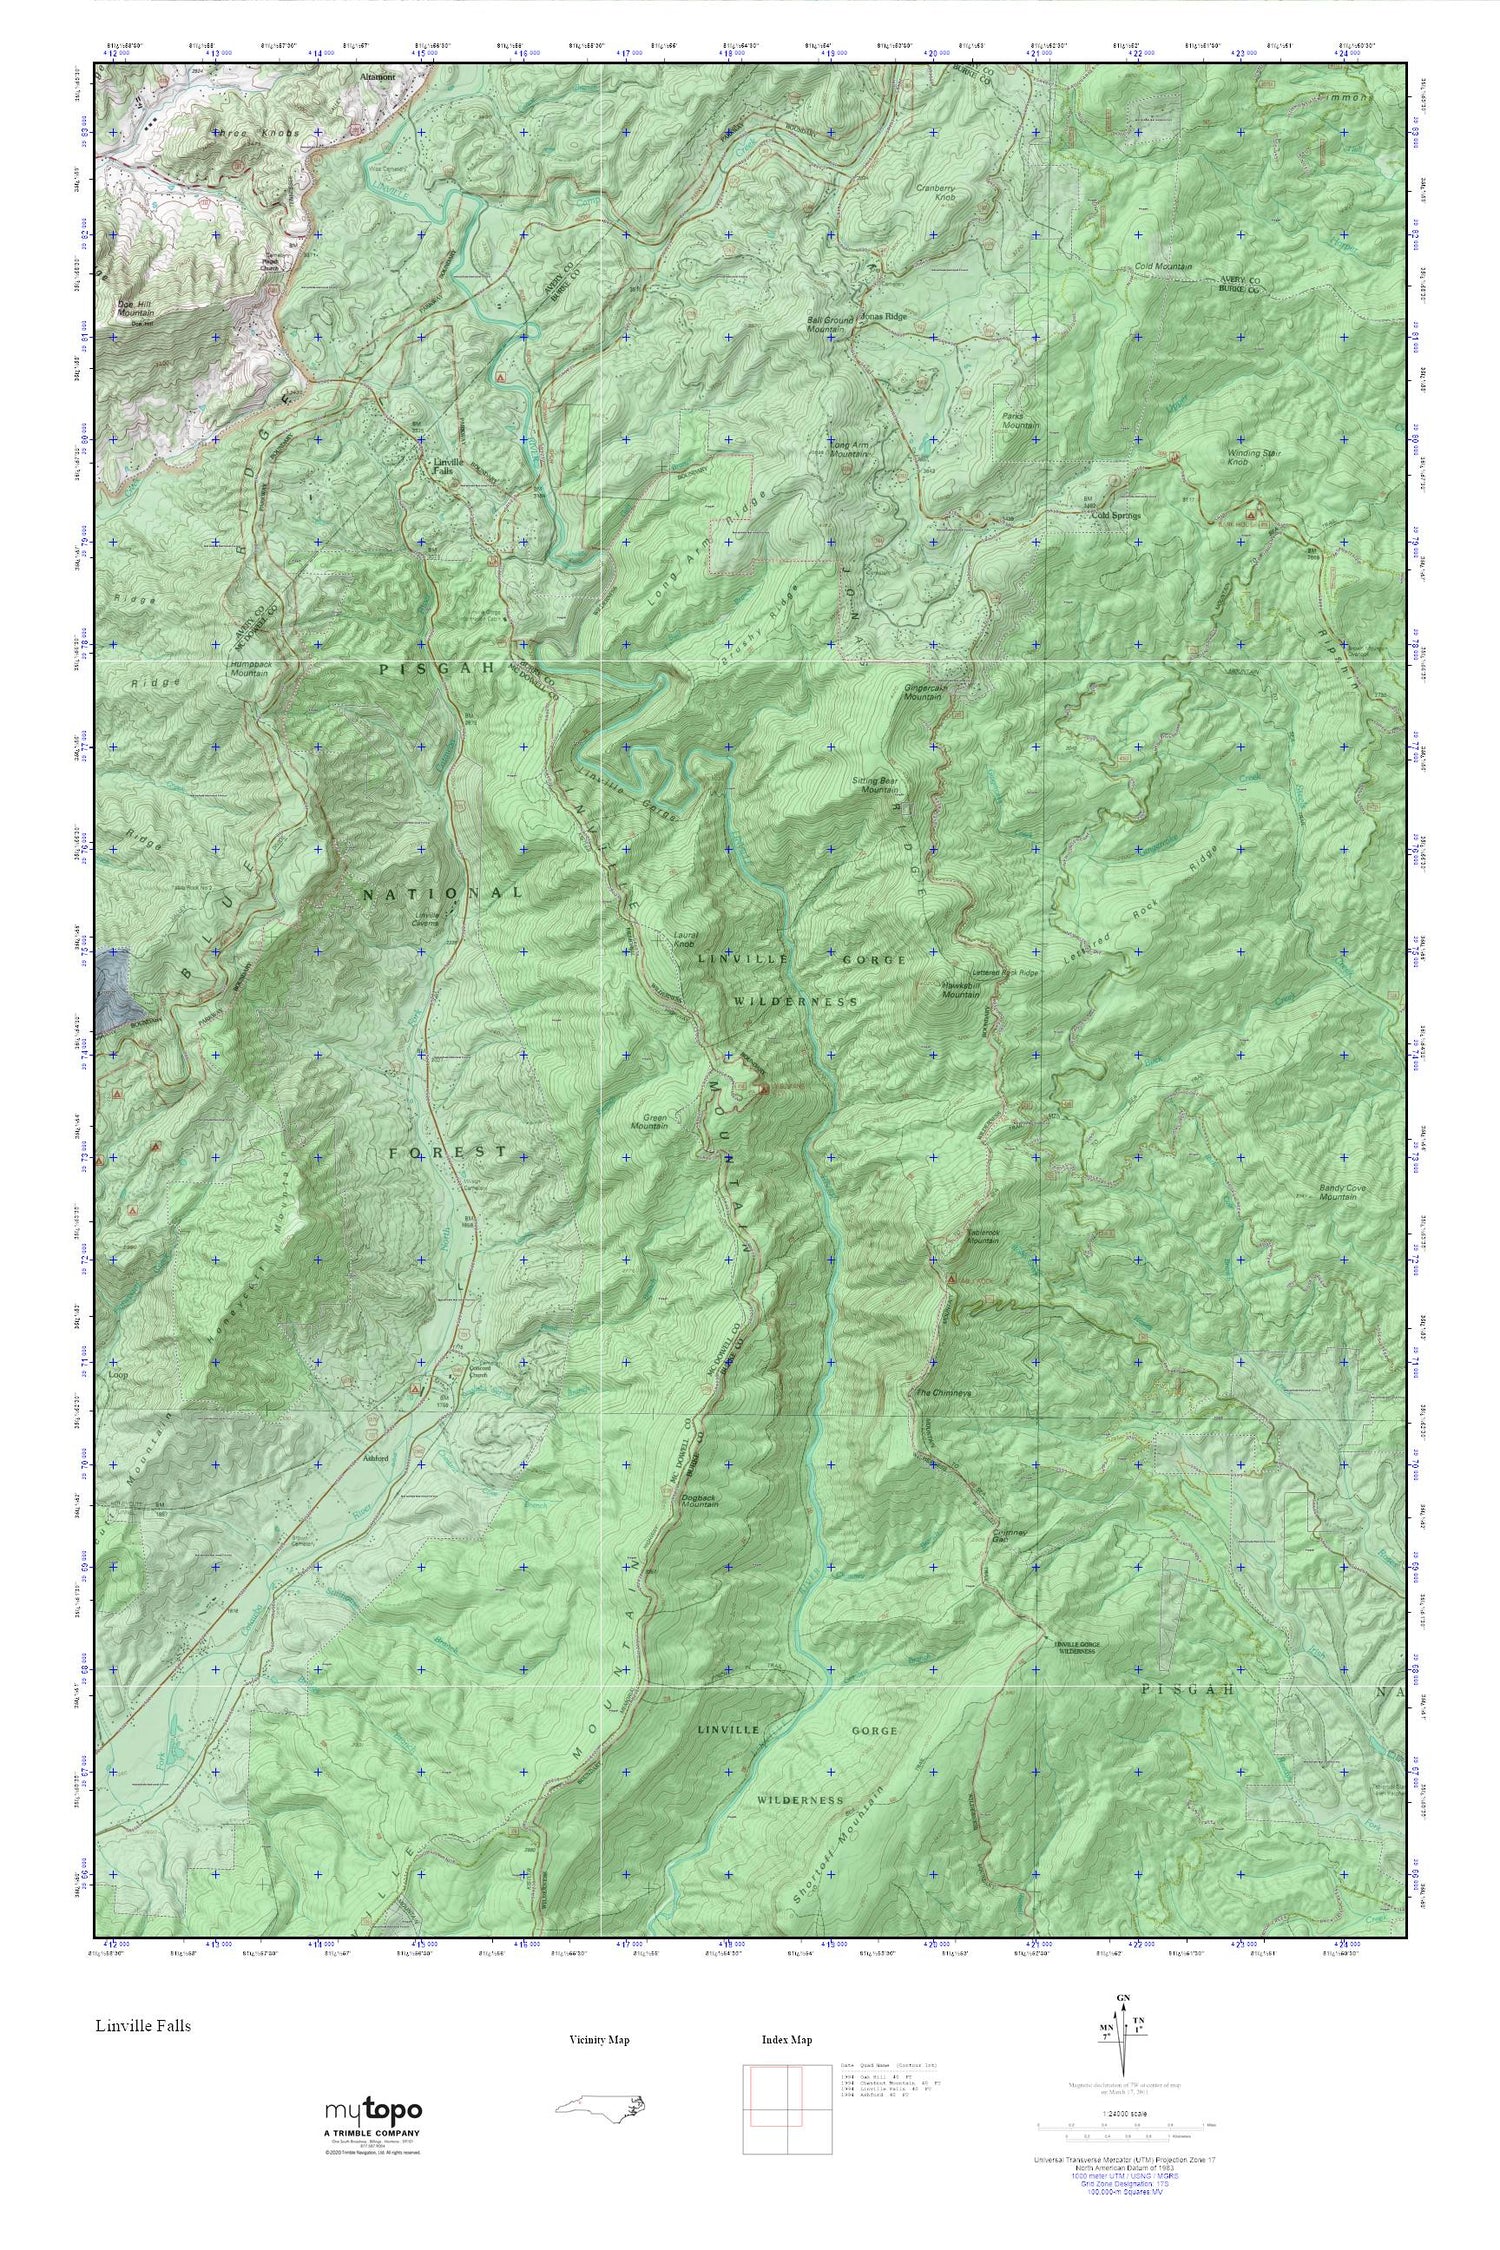 Linville Falls MyTopo Explorer Series Map Image